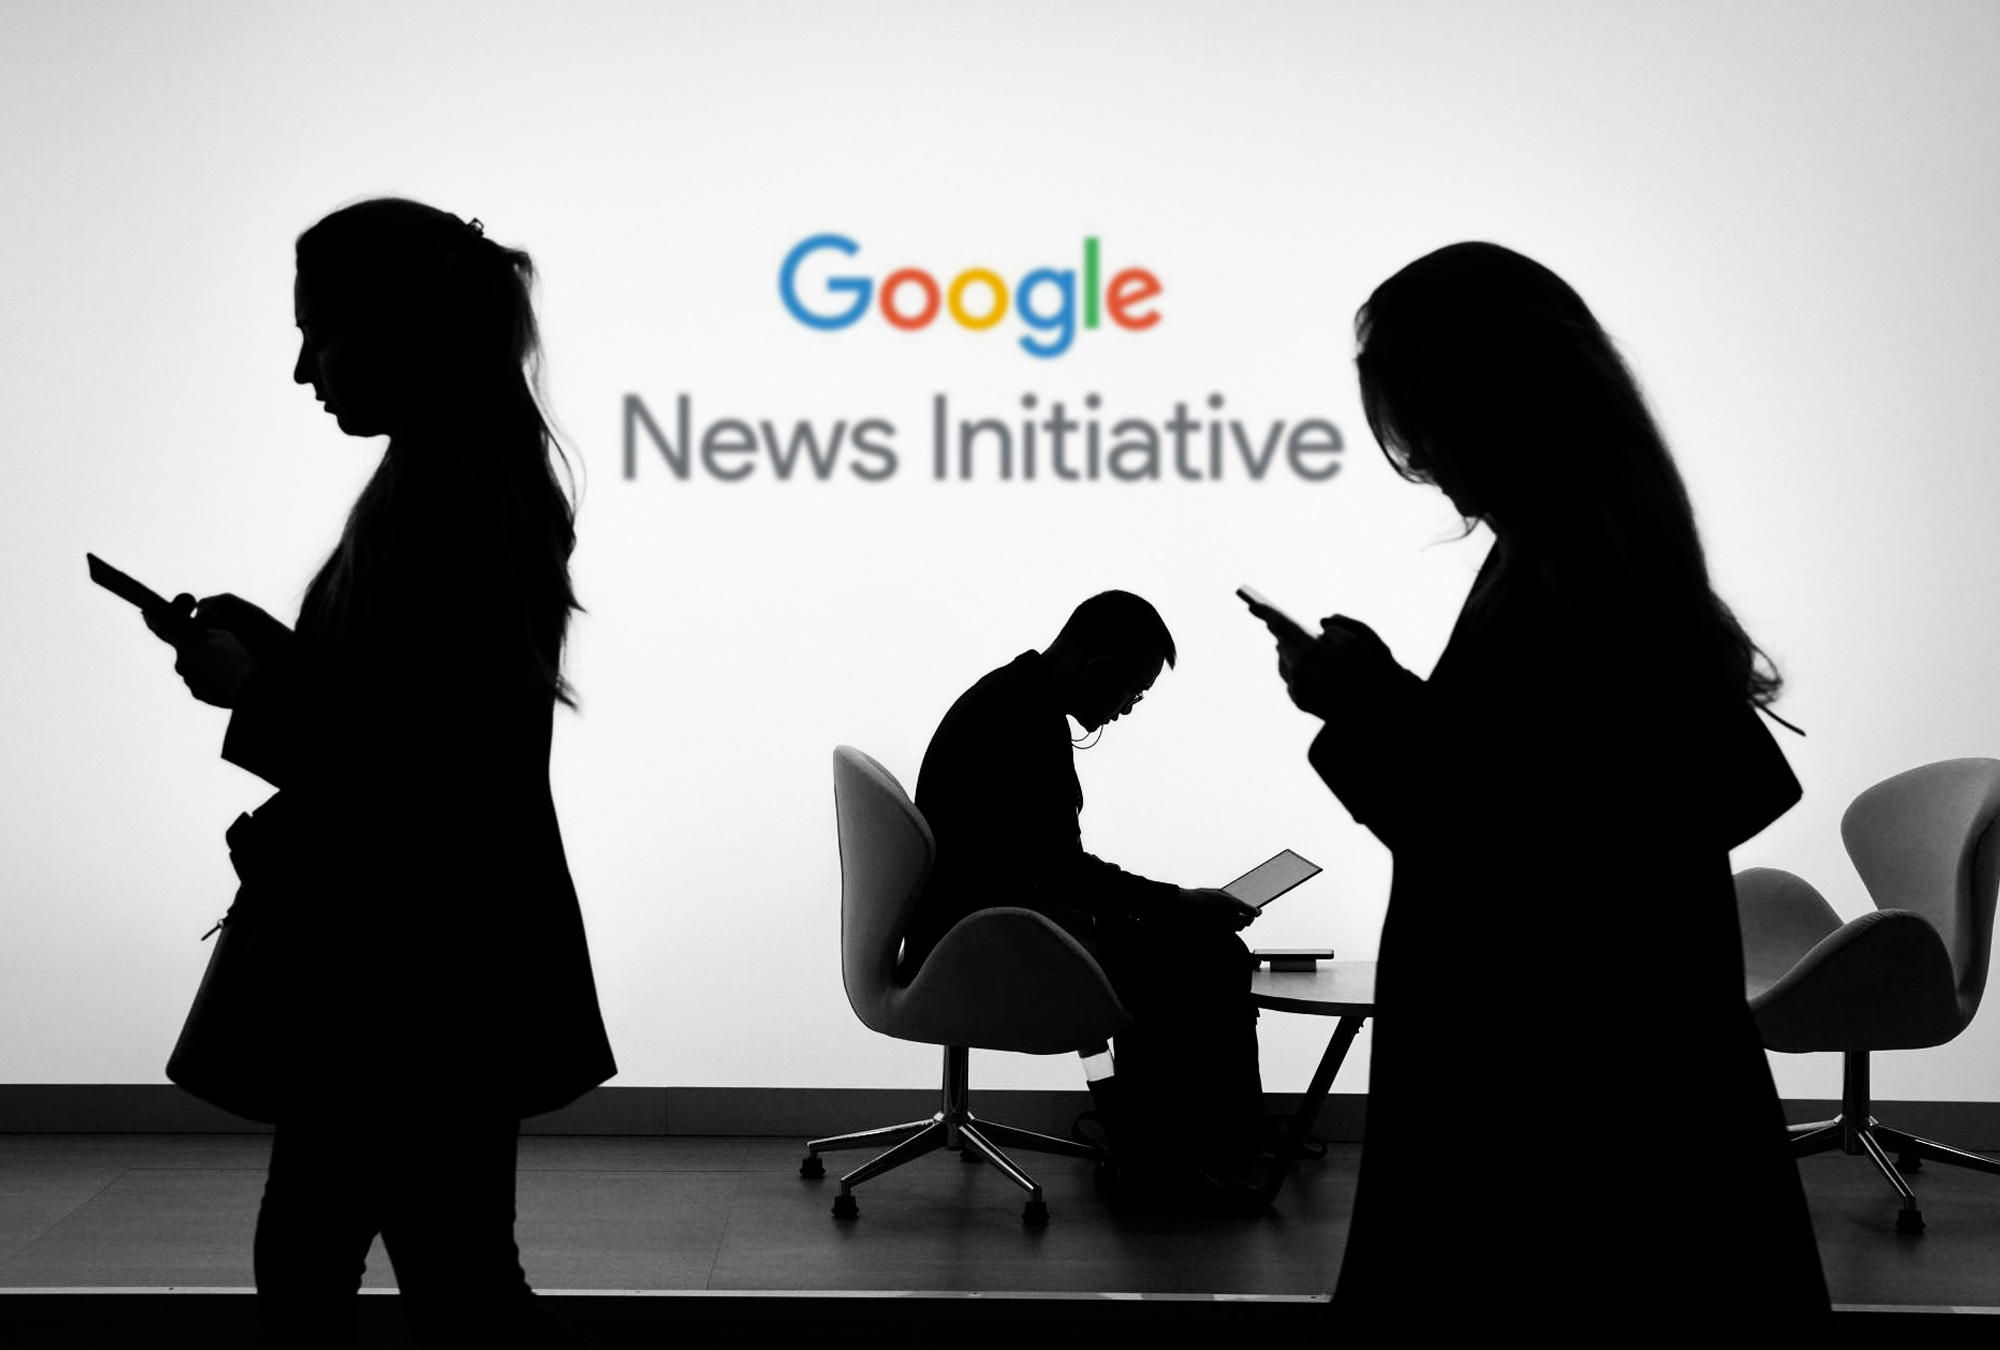 Google News Interactive